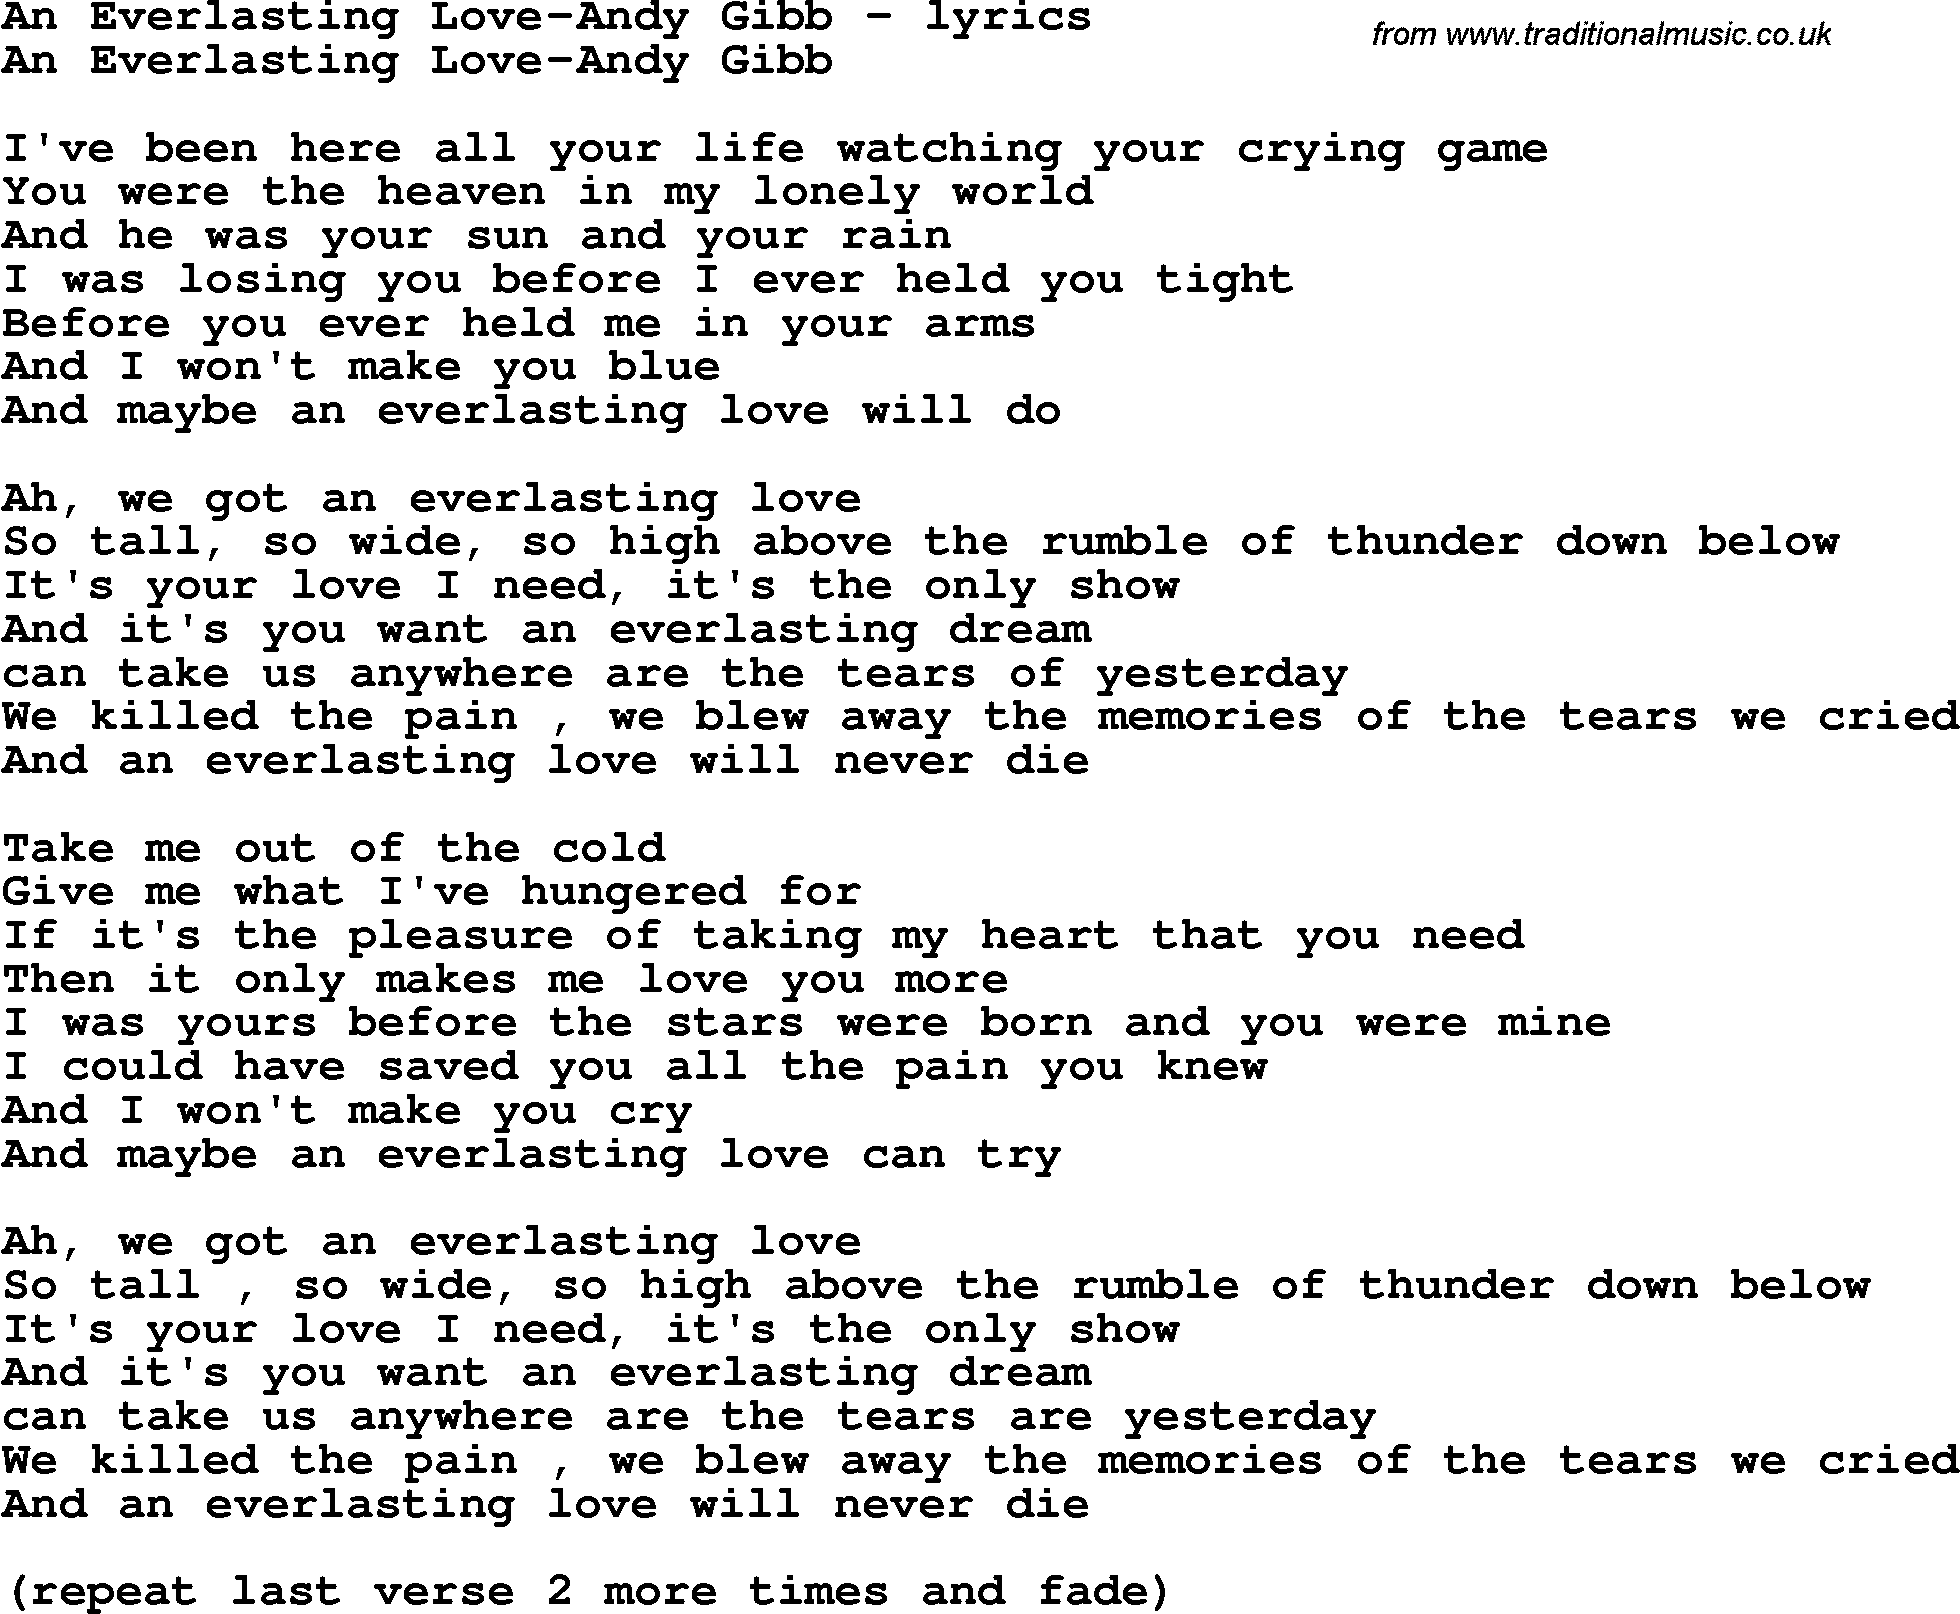 Love Song Lyrics for: An Everlasting Love-Andy Gibb